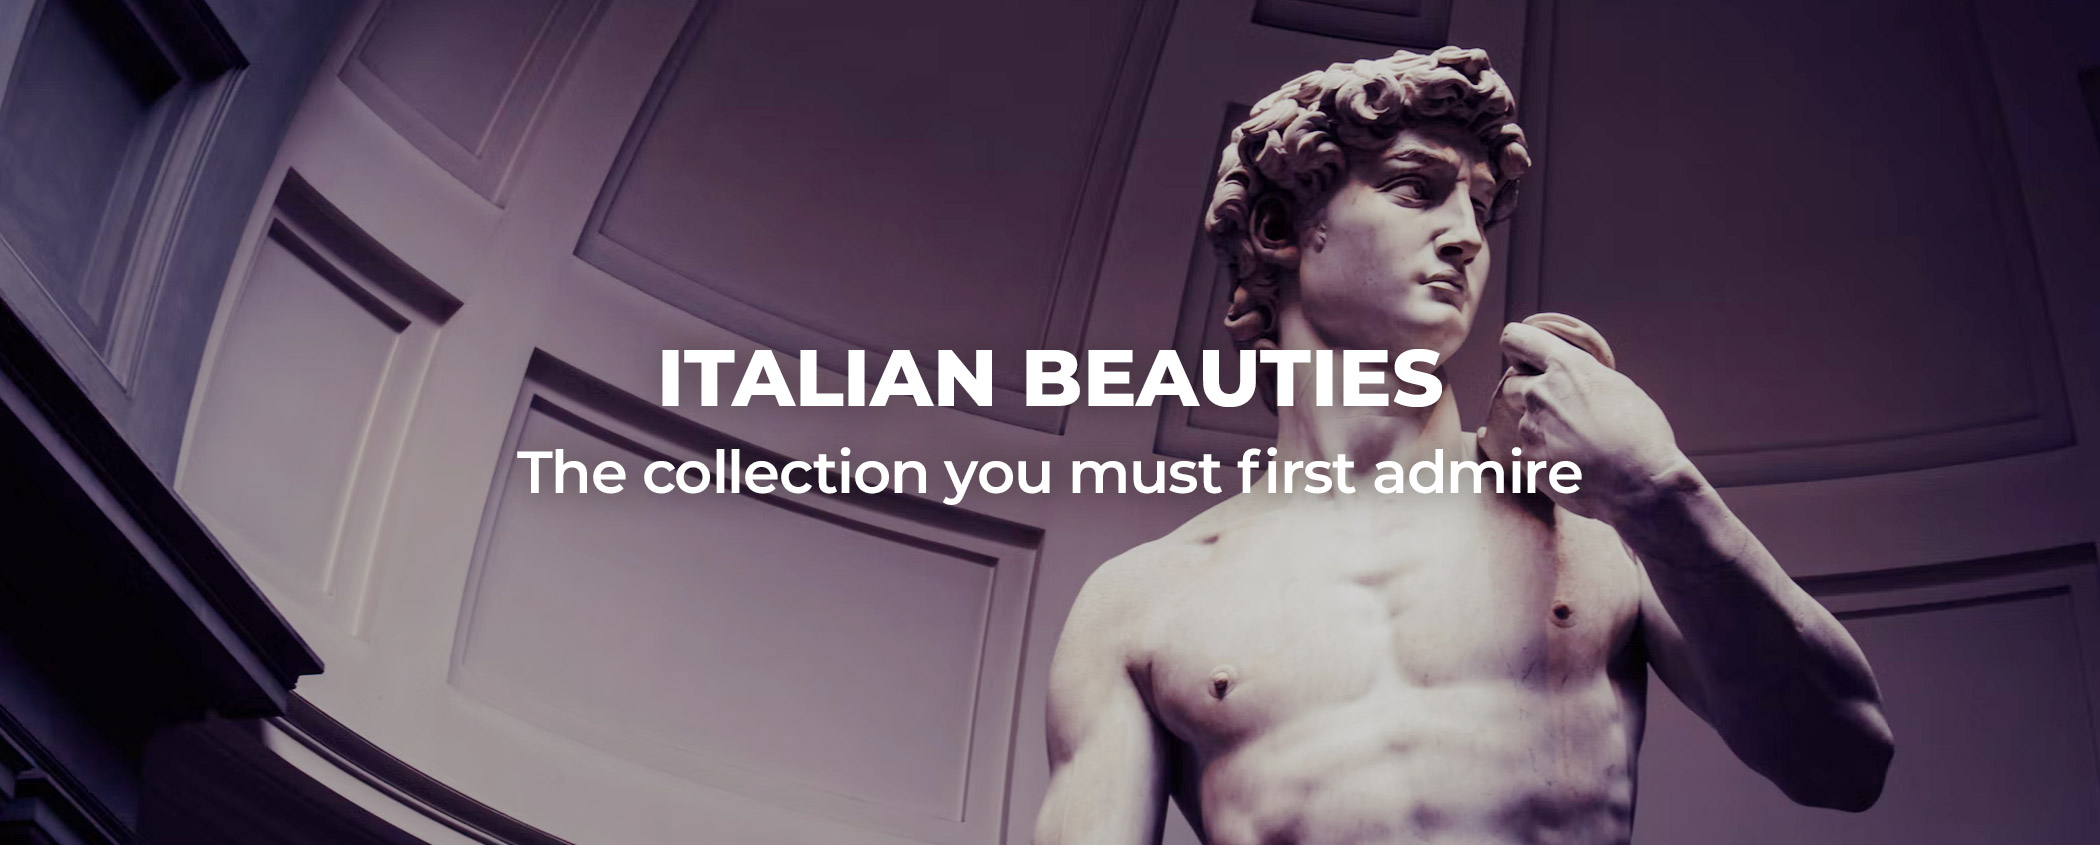 Italian beauties